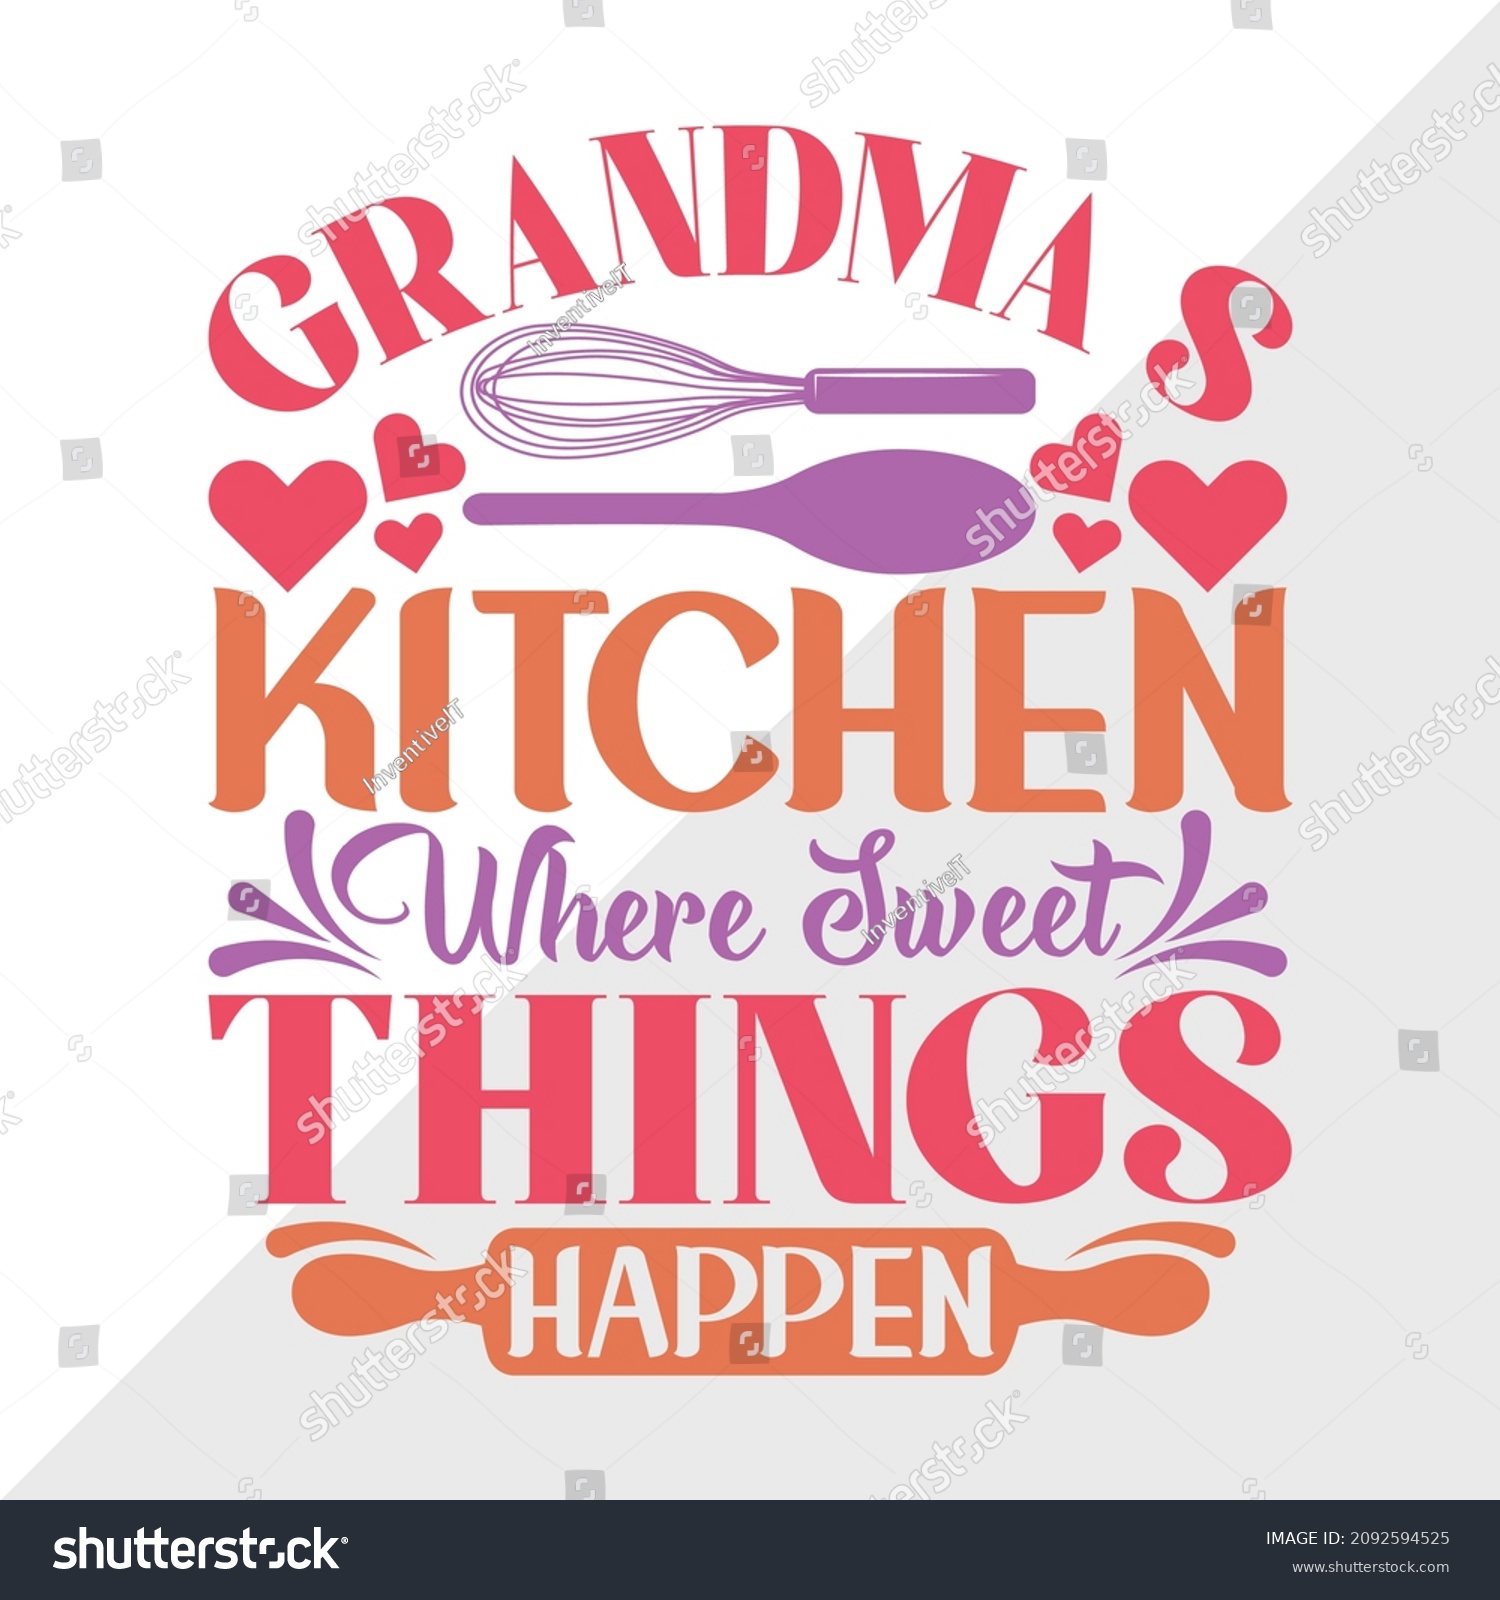 SVG of Grandma S Kitchen Where Sweet Things Happen Printable Vector Illustration svg